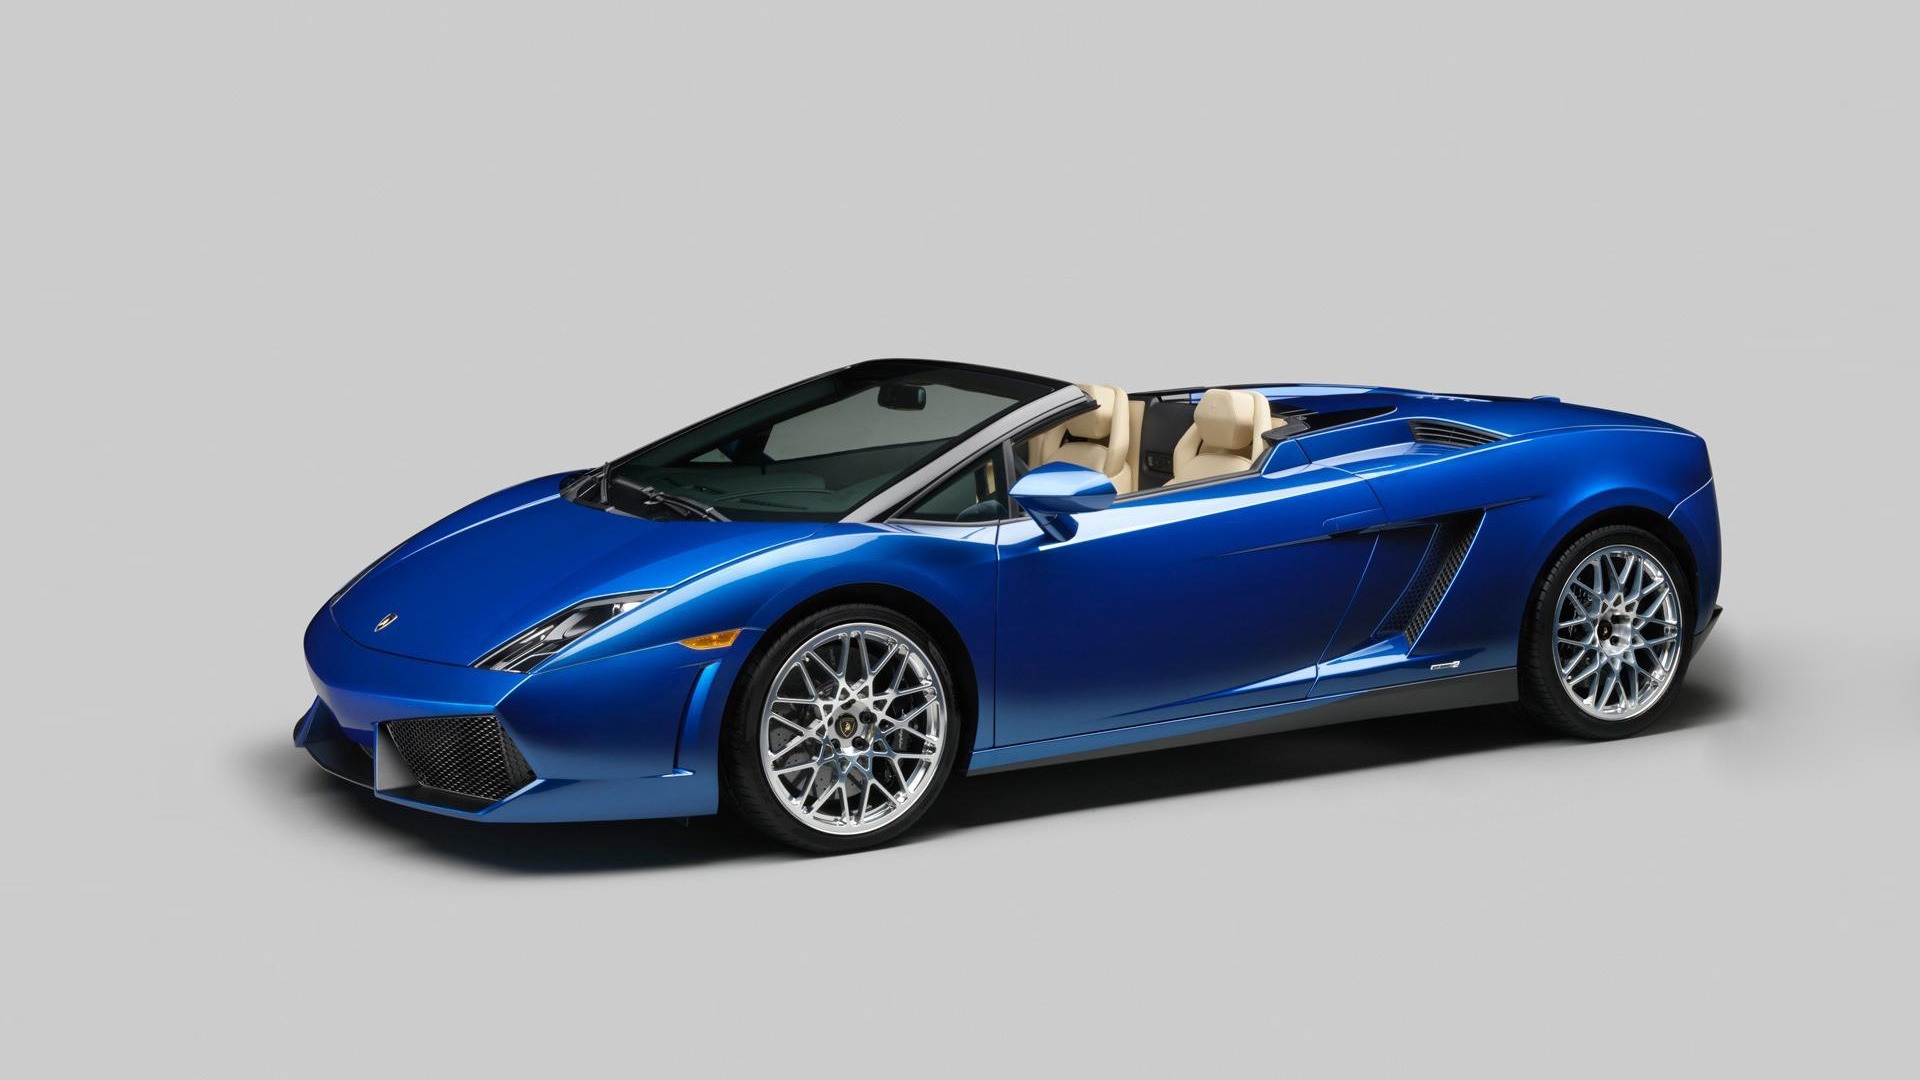 2012 Lamborghini Gallardo LP550 Spyder for 1920 x 1080 HDTV 1080p resolution